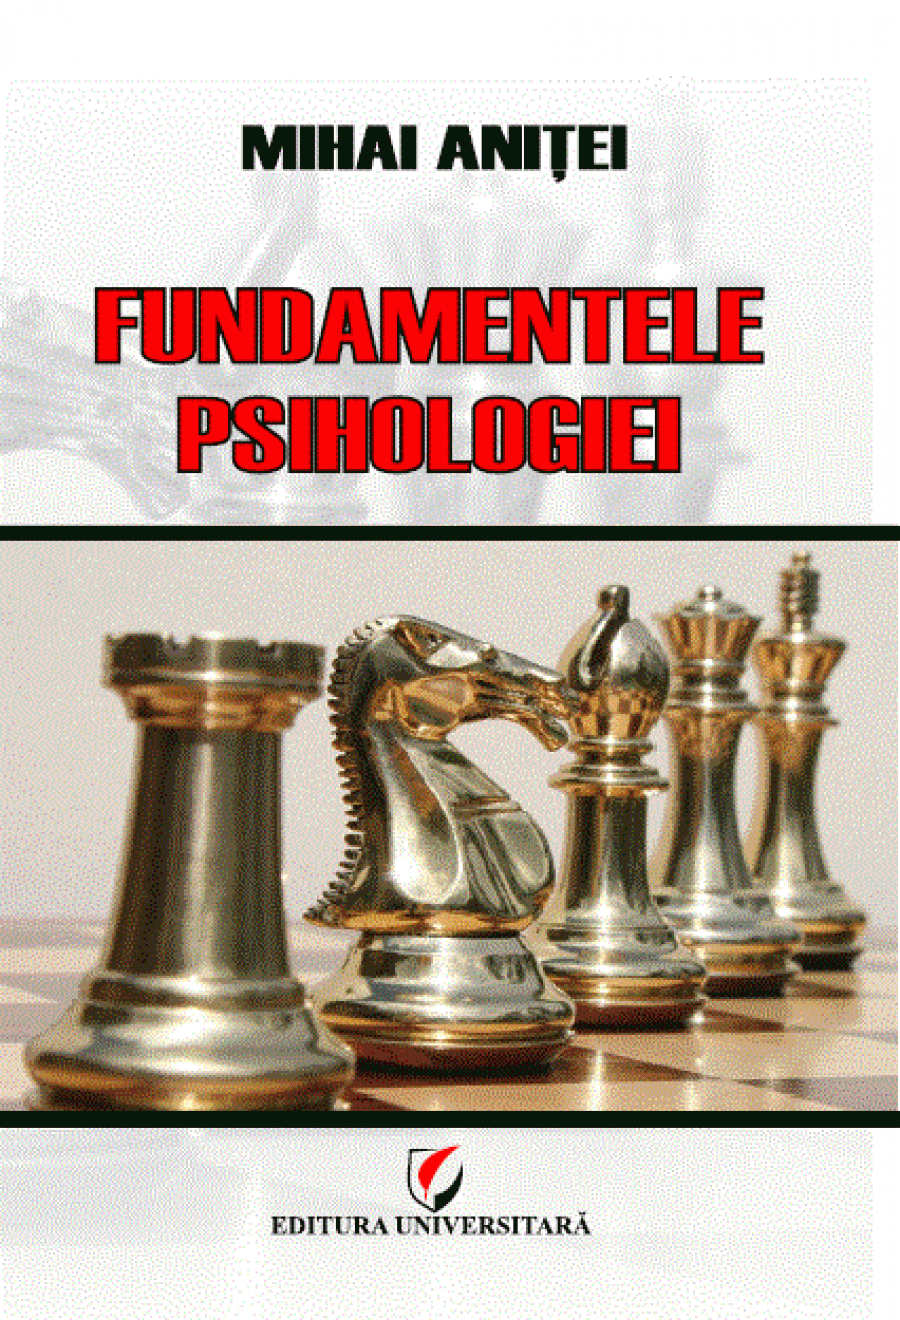 Fundamentals of psychology [1]